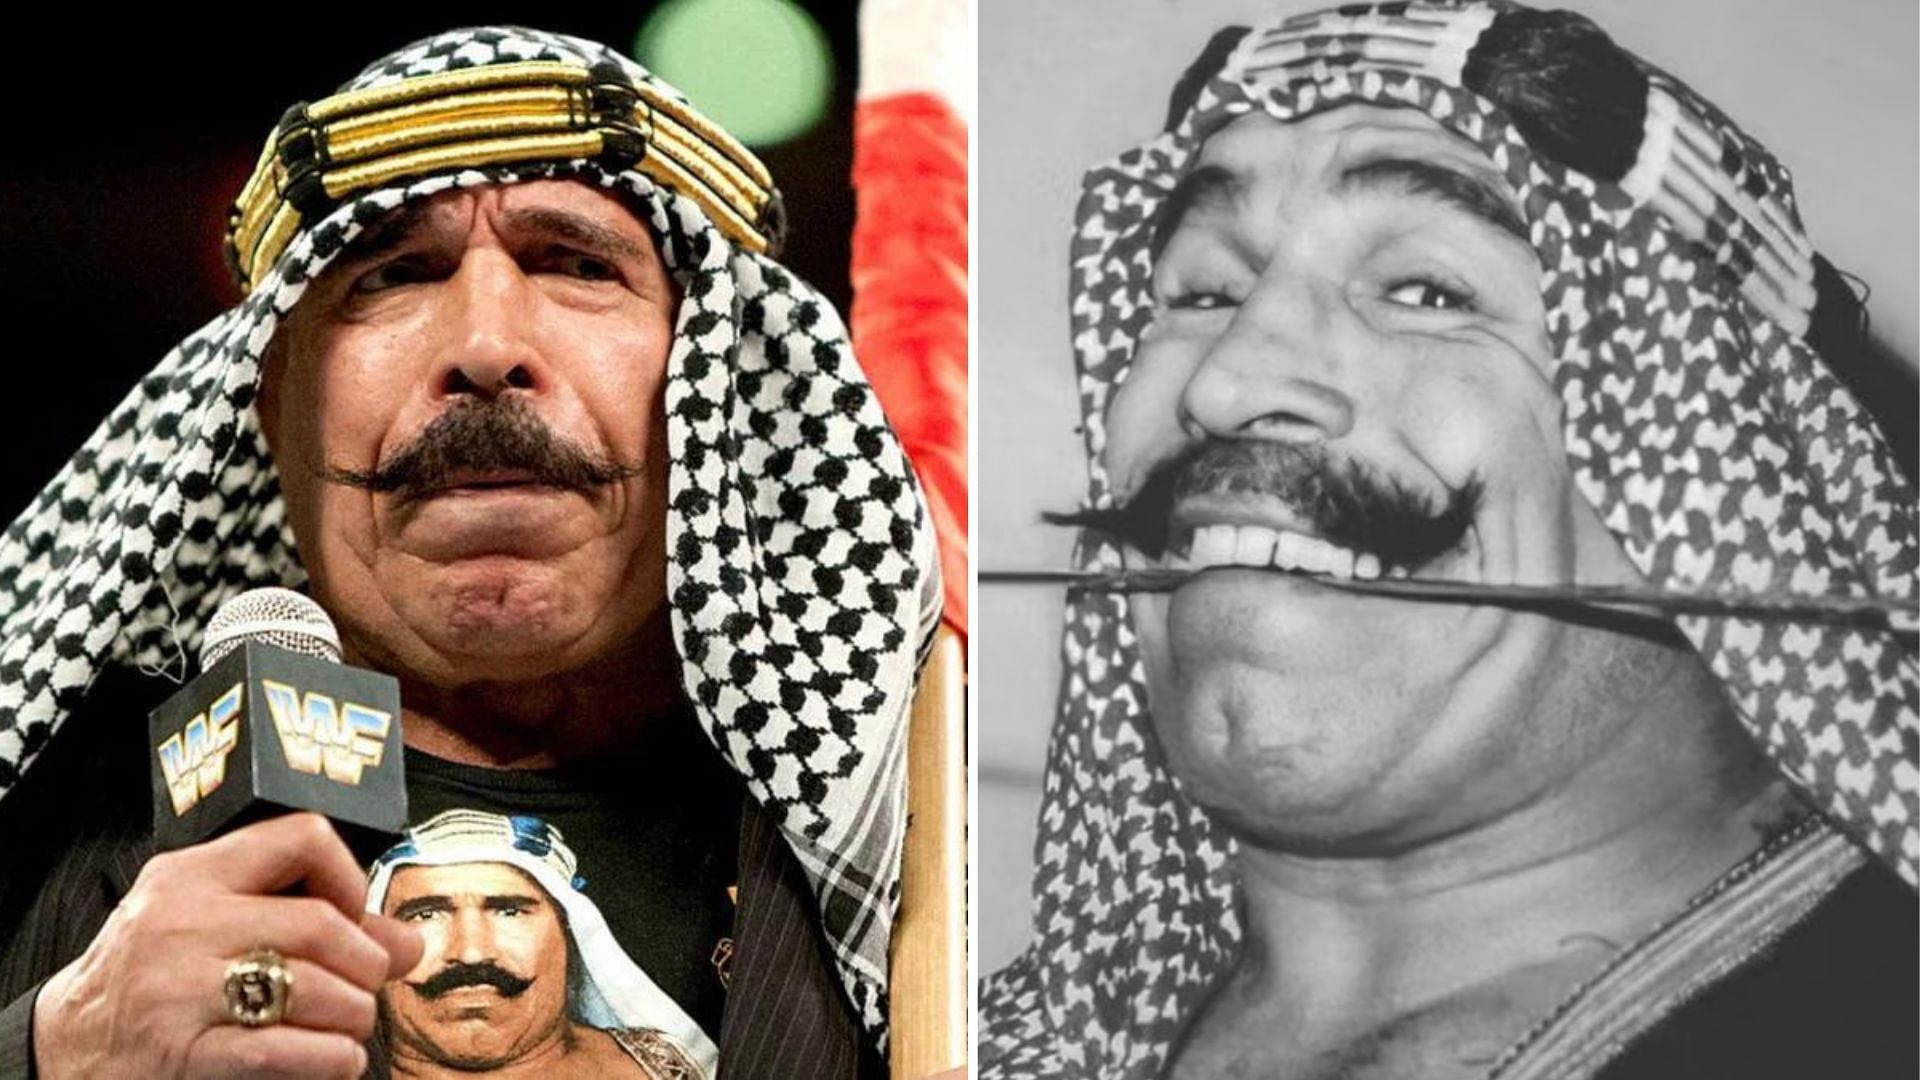 The Iron Sheik sadly passed away today.